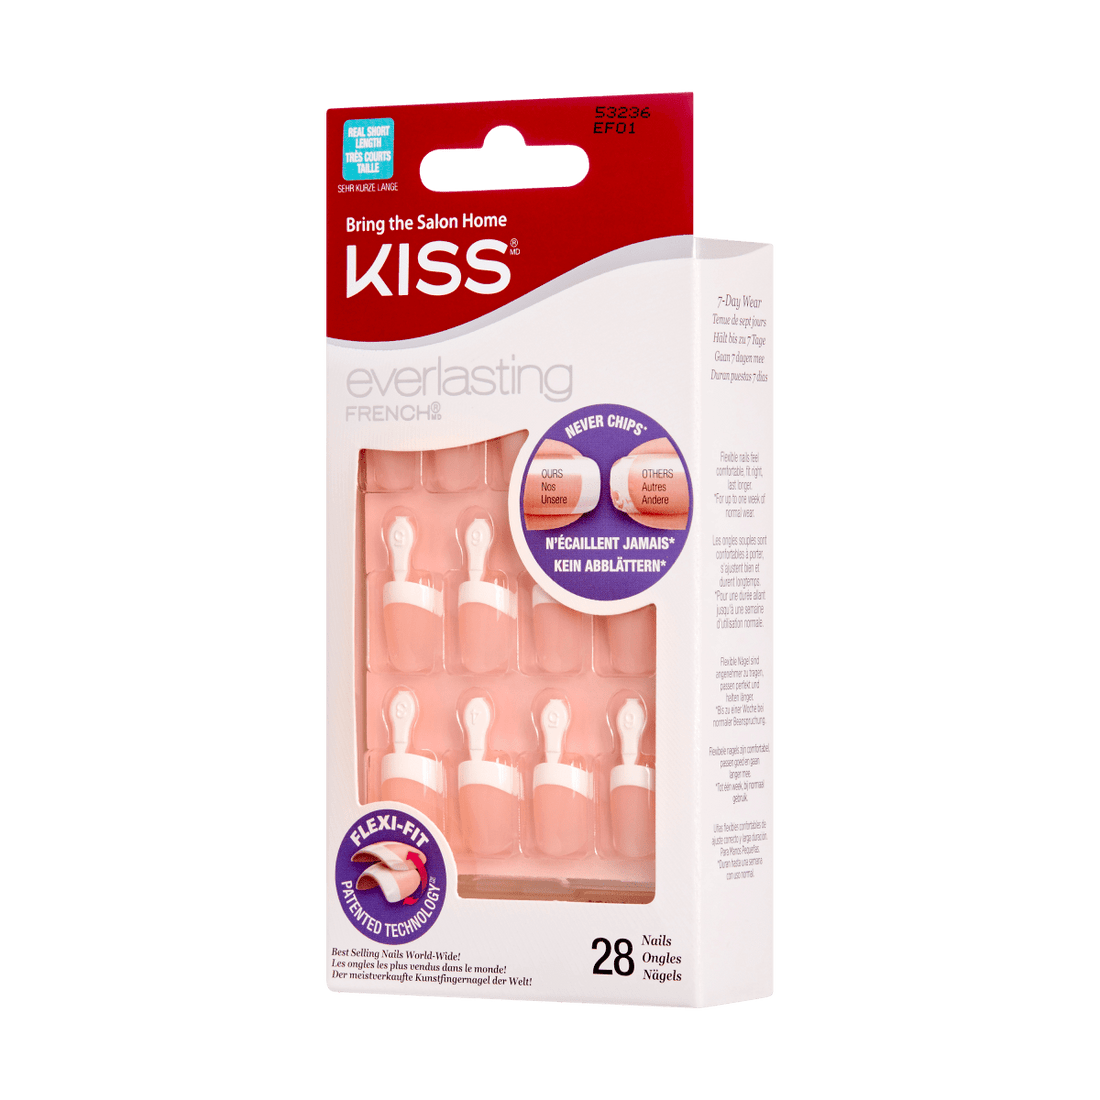 KISS Everlasting French - Endless